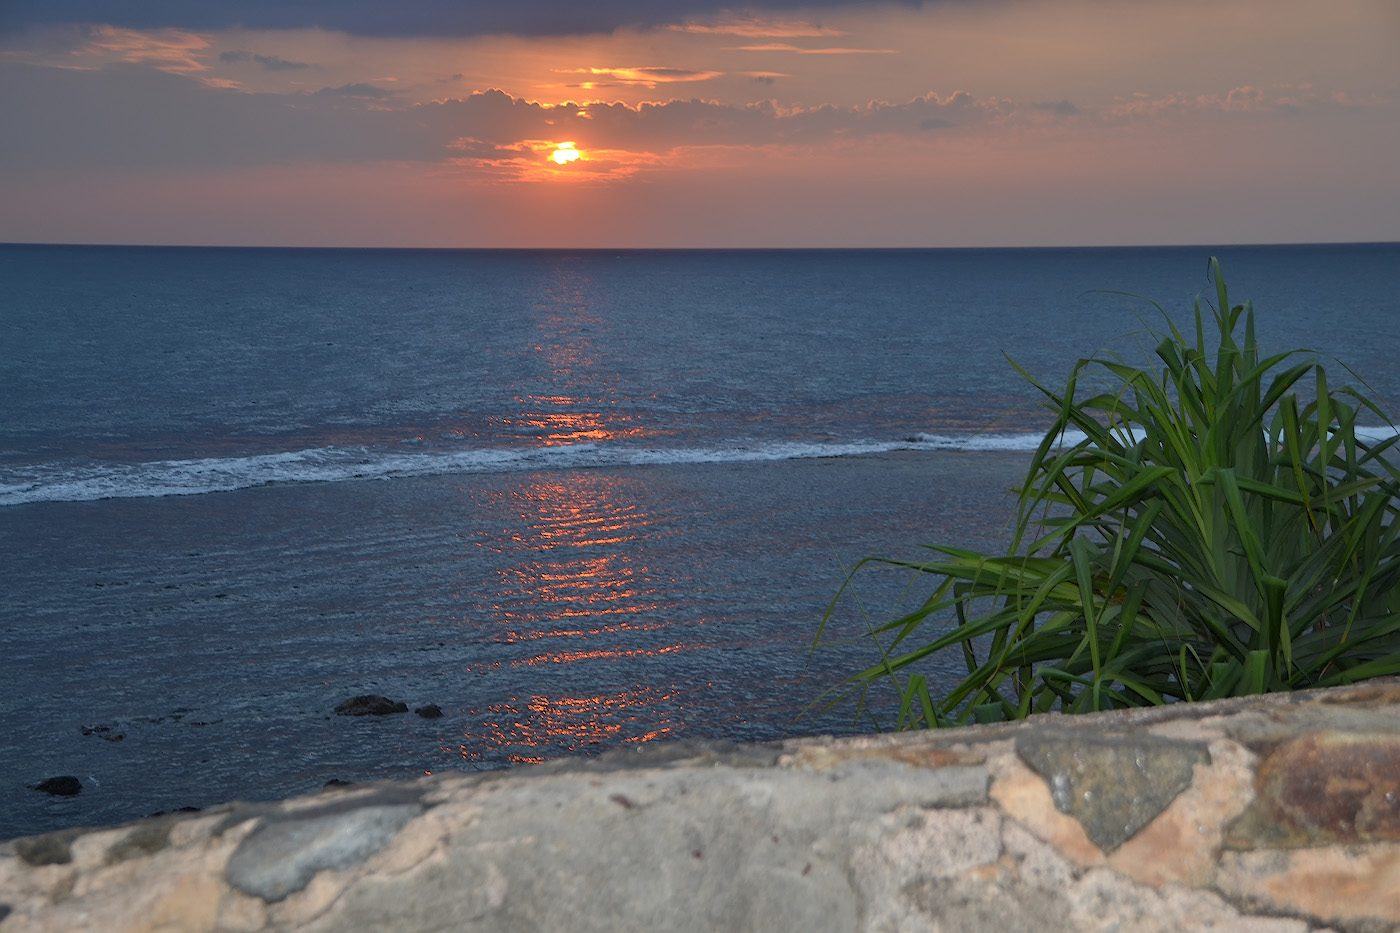 Фото 9. Чем славится Шри-Ланка? Своими невероятными закатами! Вечер на пляже Унаватуна. Настройки: 1/125, 5, 110, 55.